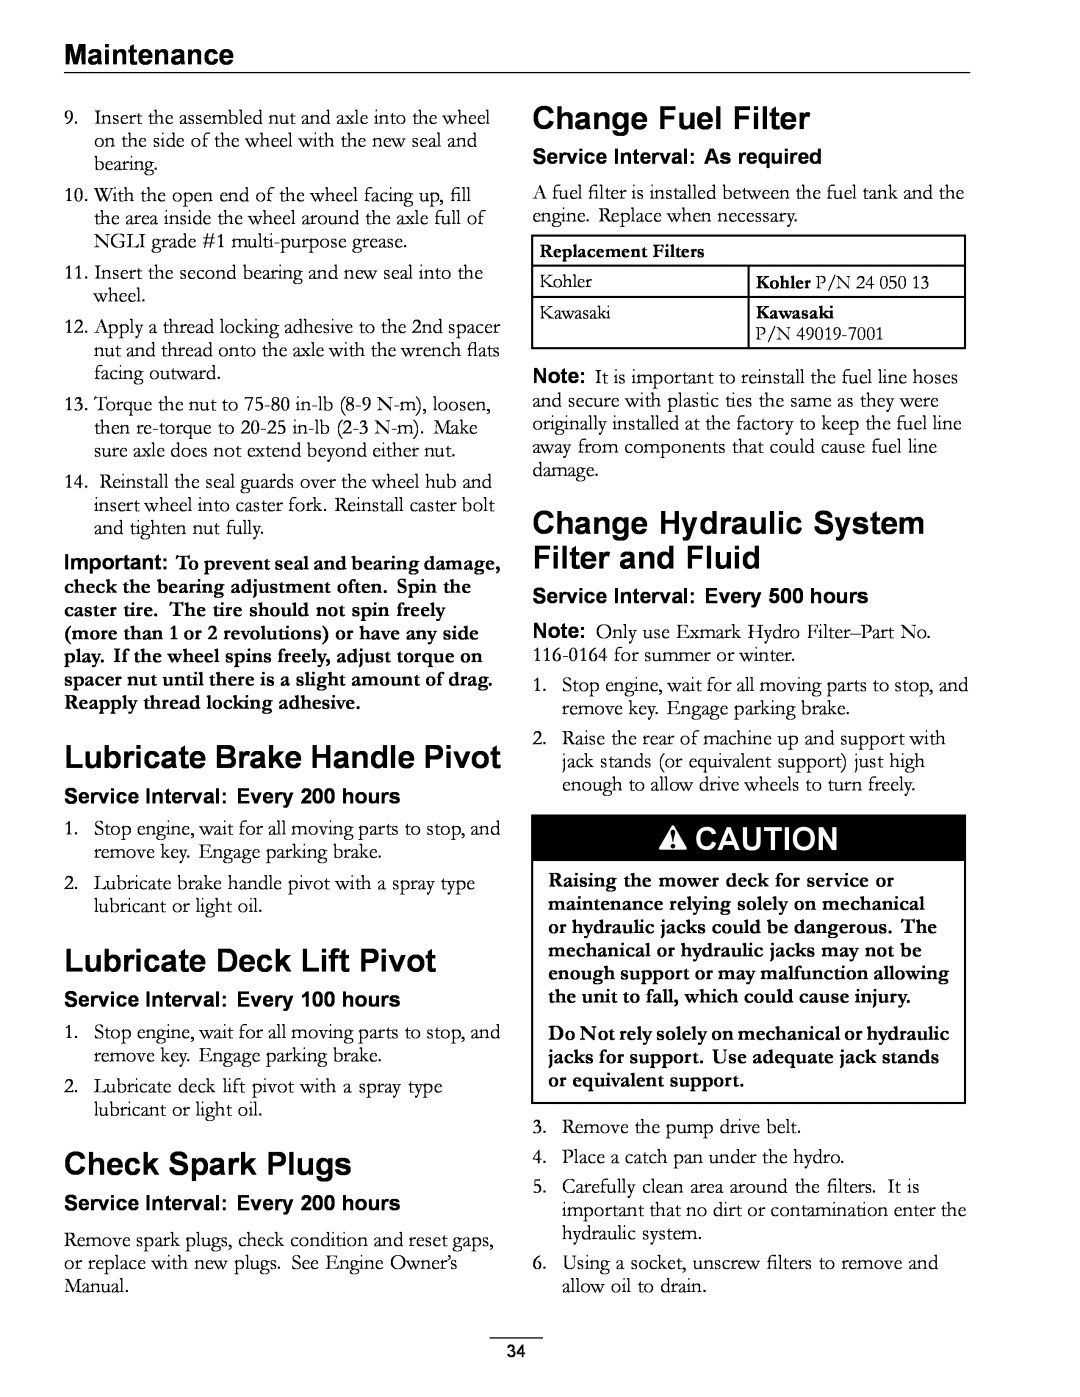 Exmark 4500-507 manual Lubricate Brake Handle Pivot, Lubricate Deck Lift Pivot, Check Spark Plugs, Change Fuel Filter 